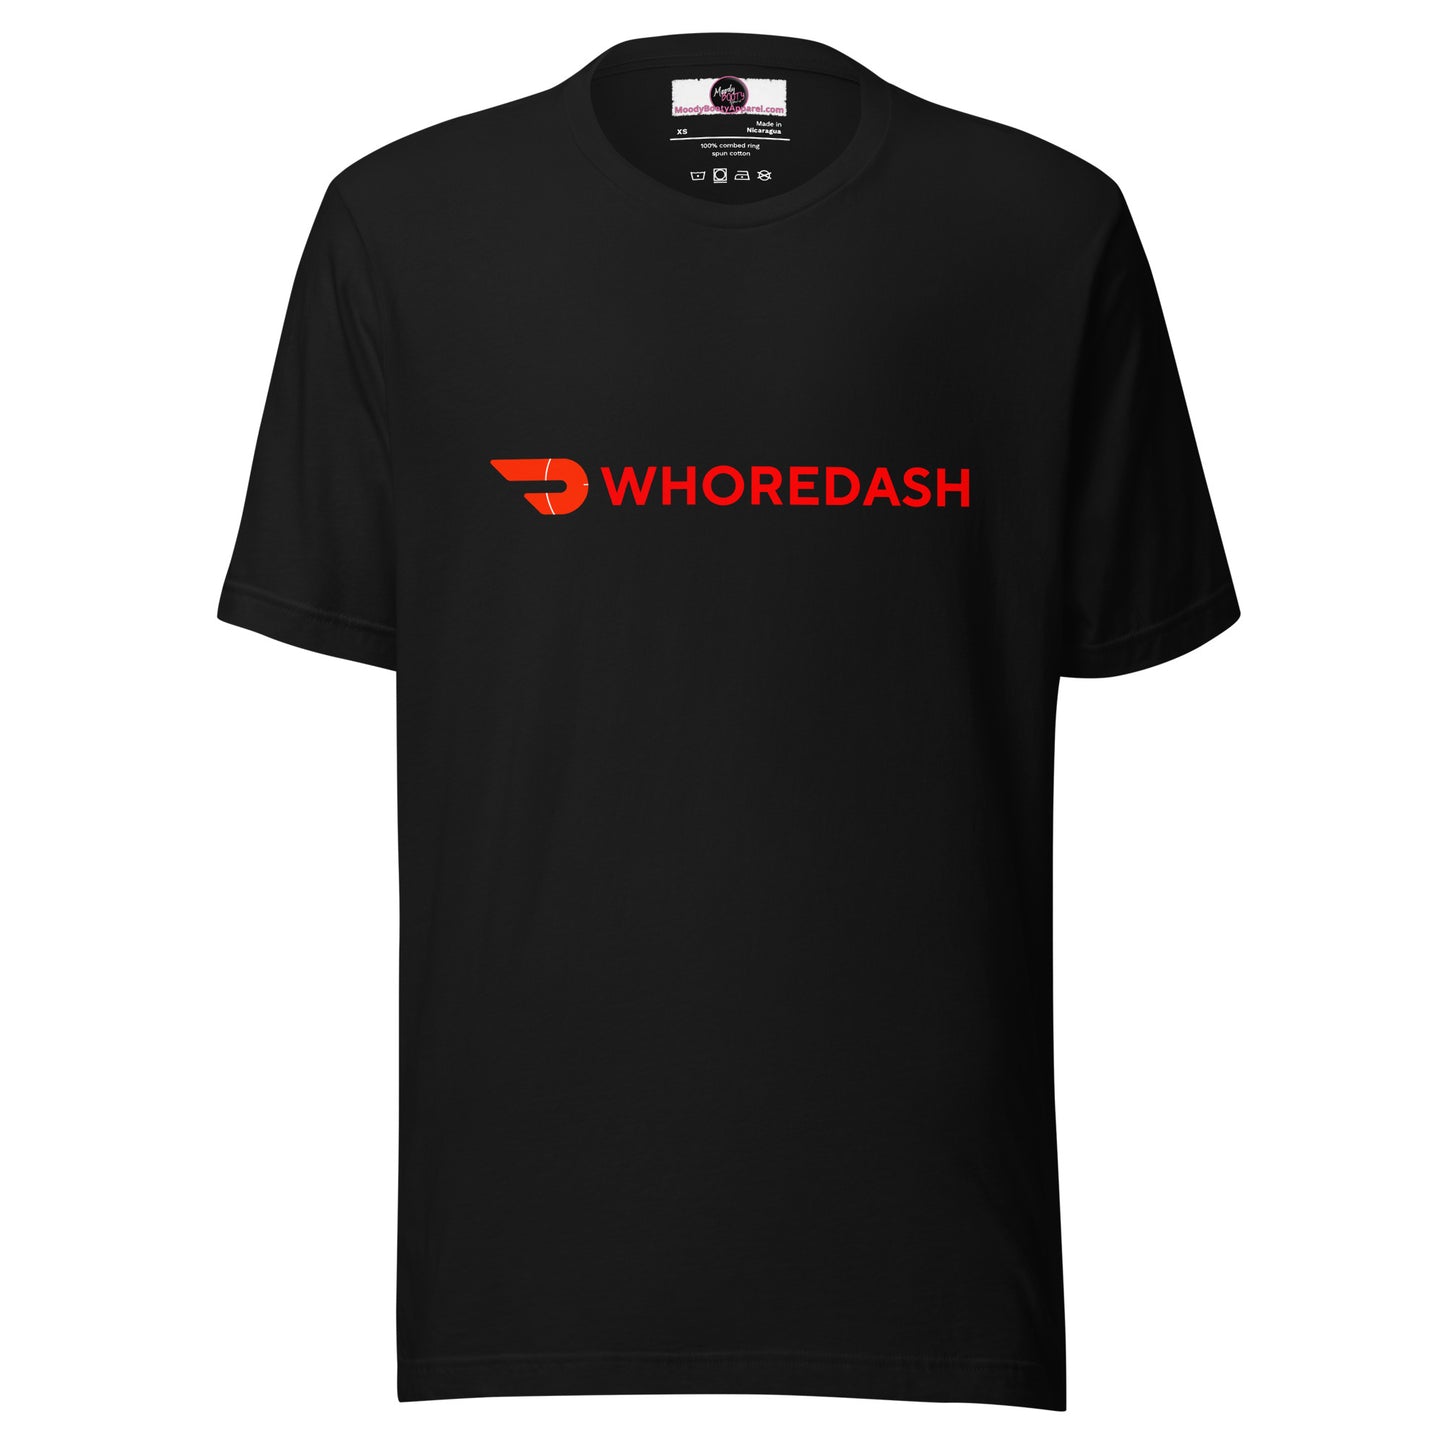 WHOREDASH - Unisex t-shirt